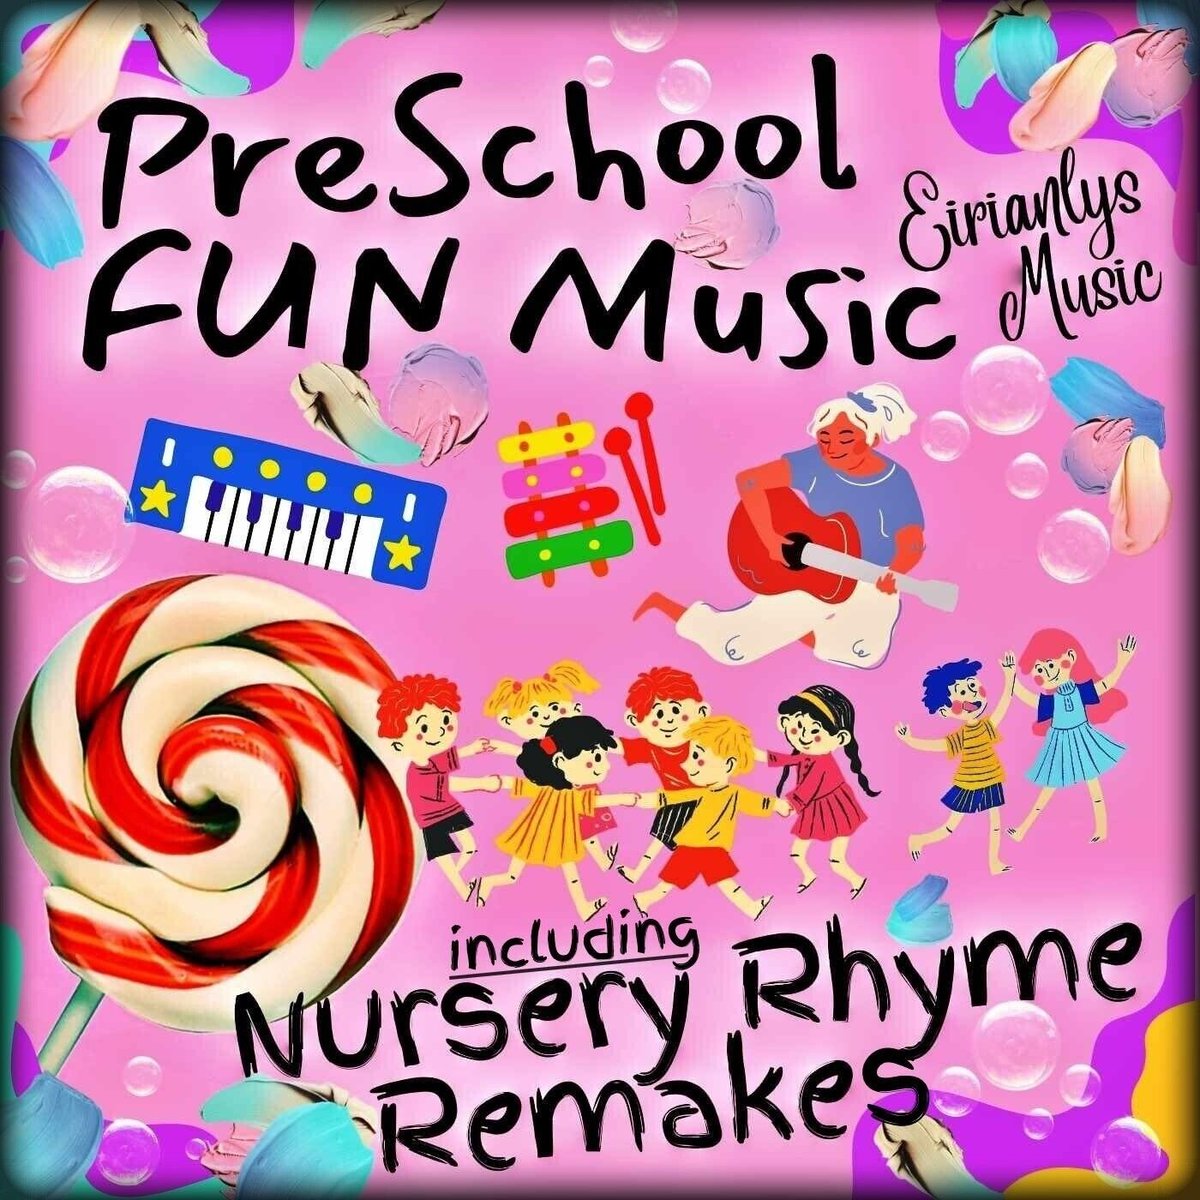 PreSchool Fun Music tracks: 20 ROYALTY FREE Album - Supports HOPE HOUSE CHILDREN'S HOSPICES 
£7.99 with full license.
Raising Money for @HHTGhospices #RoyaltyFree #music #nurseryrhymes #preschool #childrenmusic #fundraising #charity
ebay.co.uk/itm/1724949251… #eBay via @eBay_UK